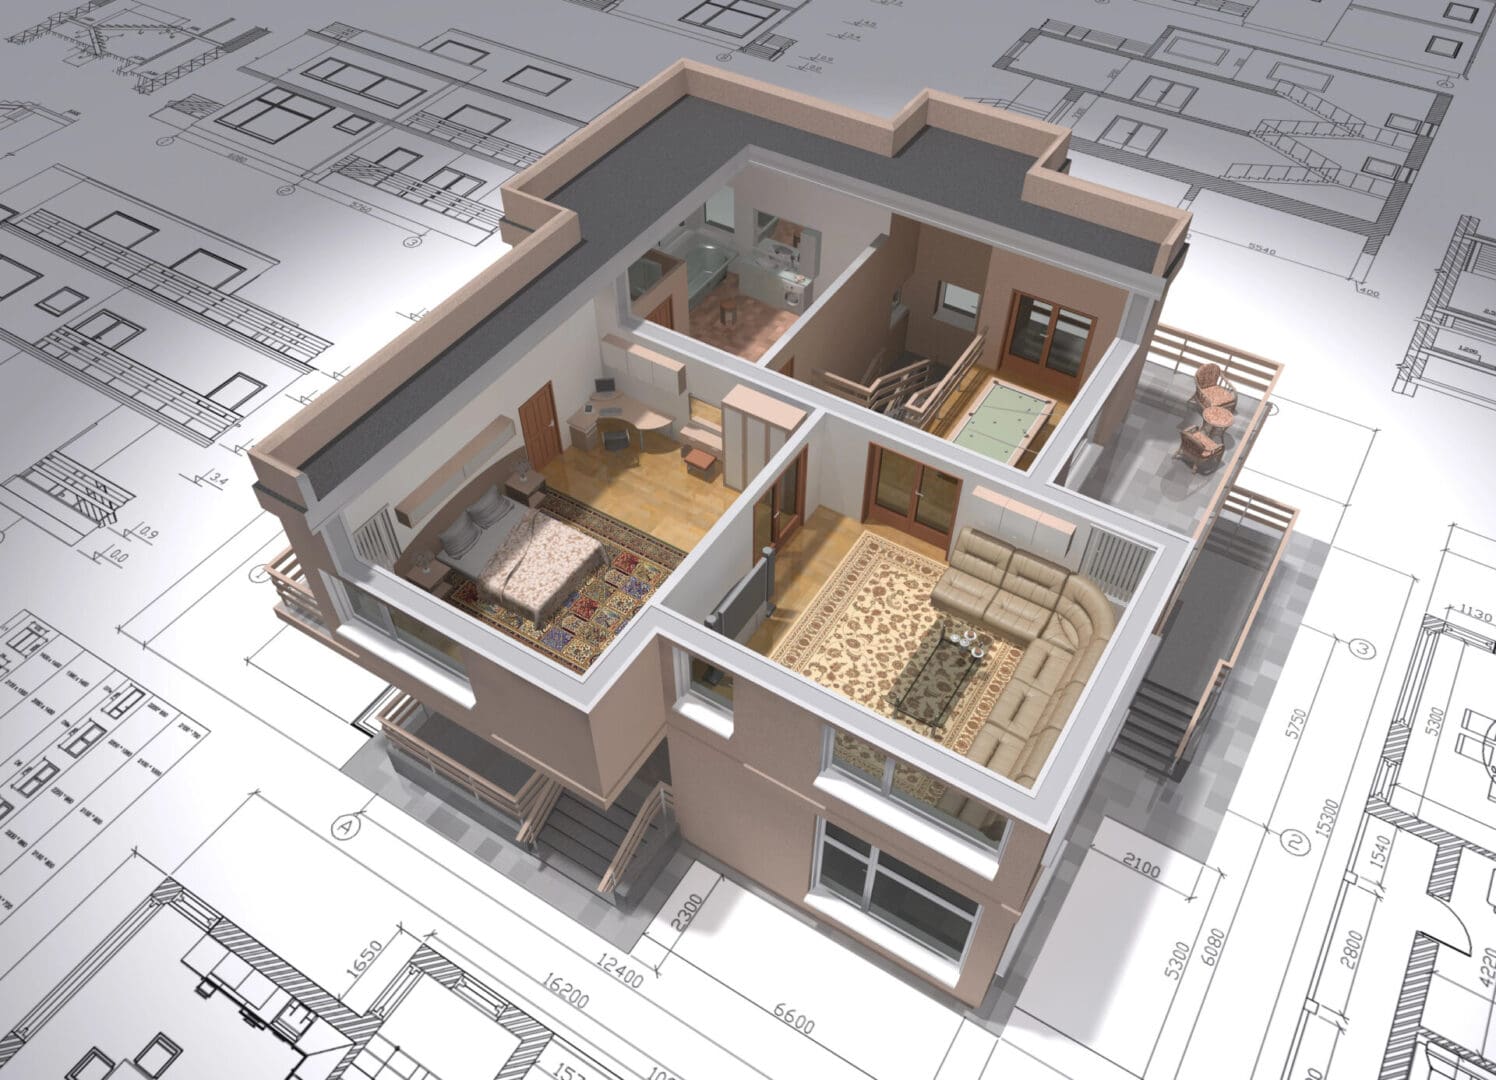 3D model of a house on blueprints.